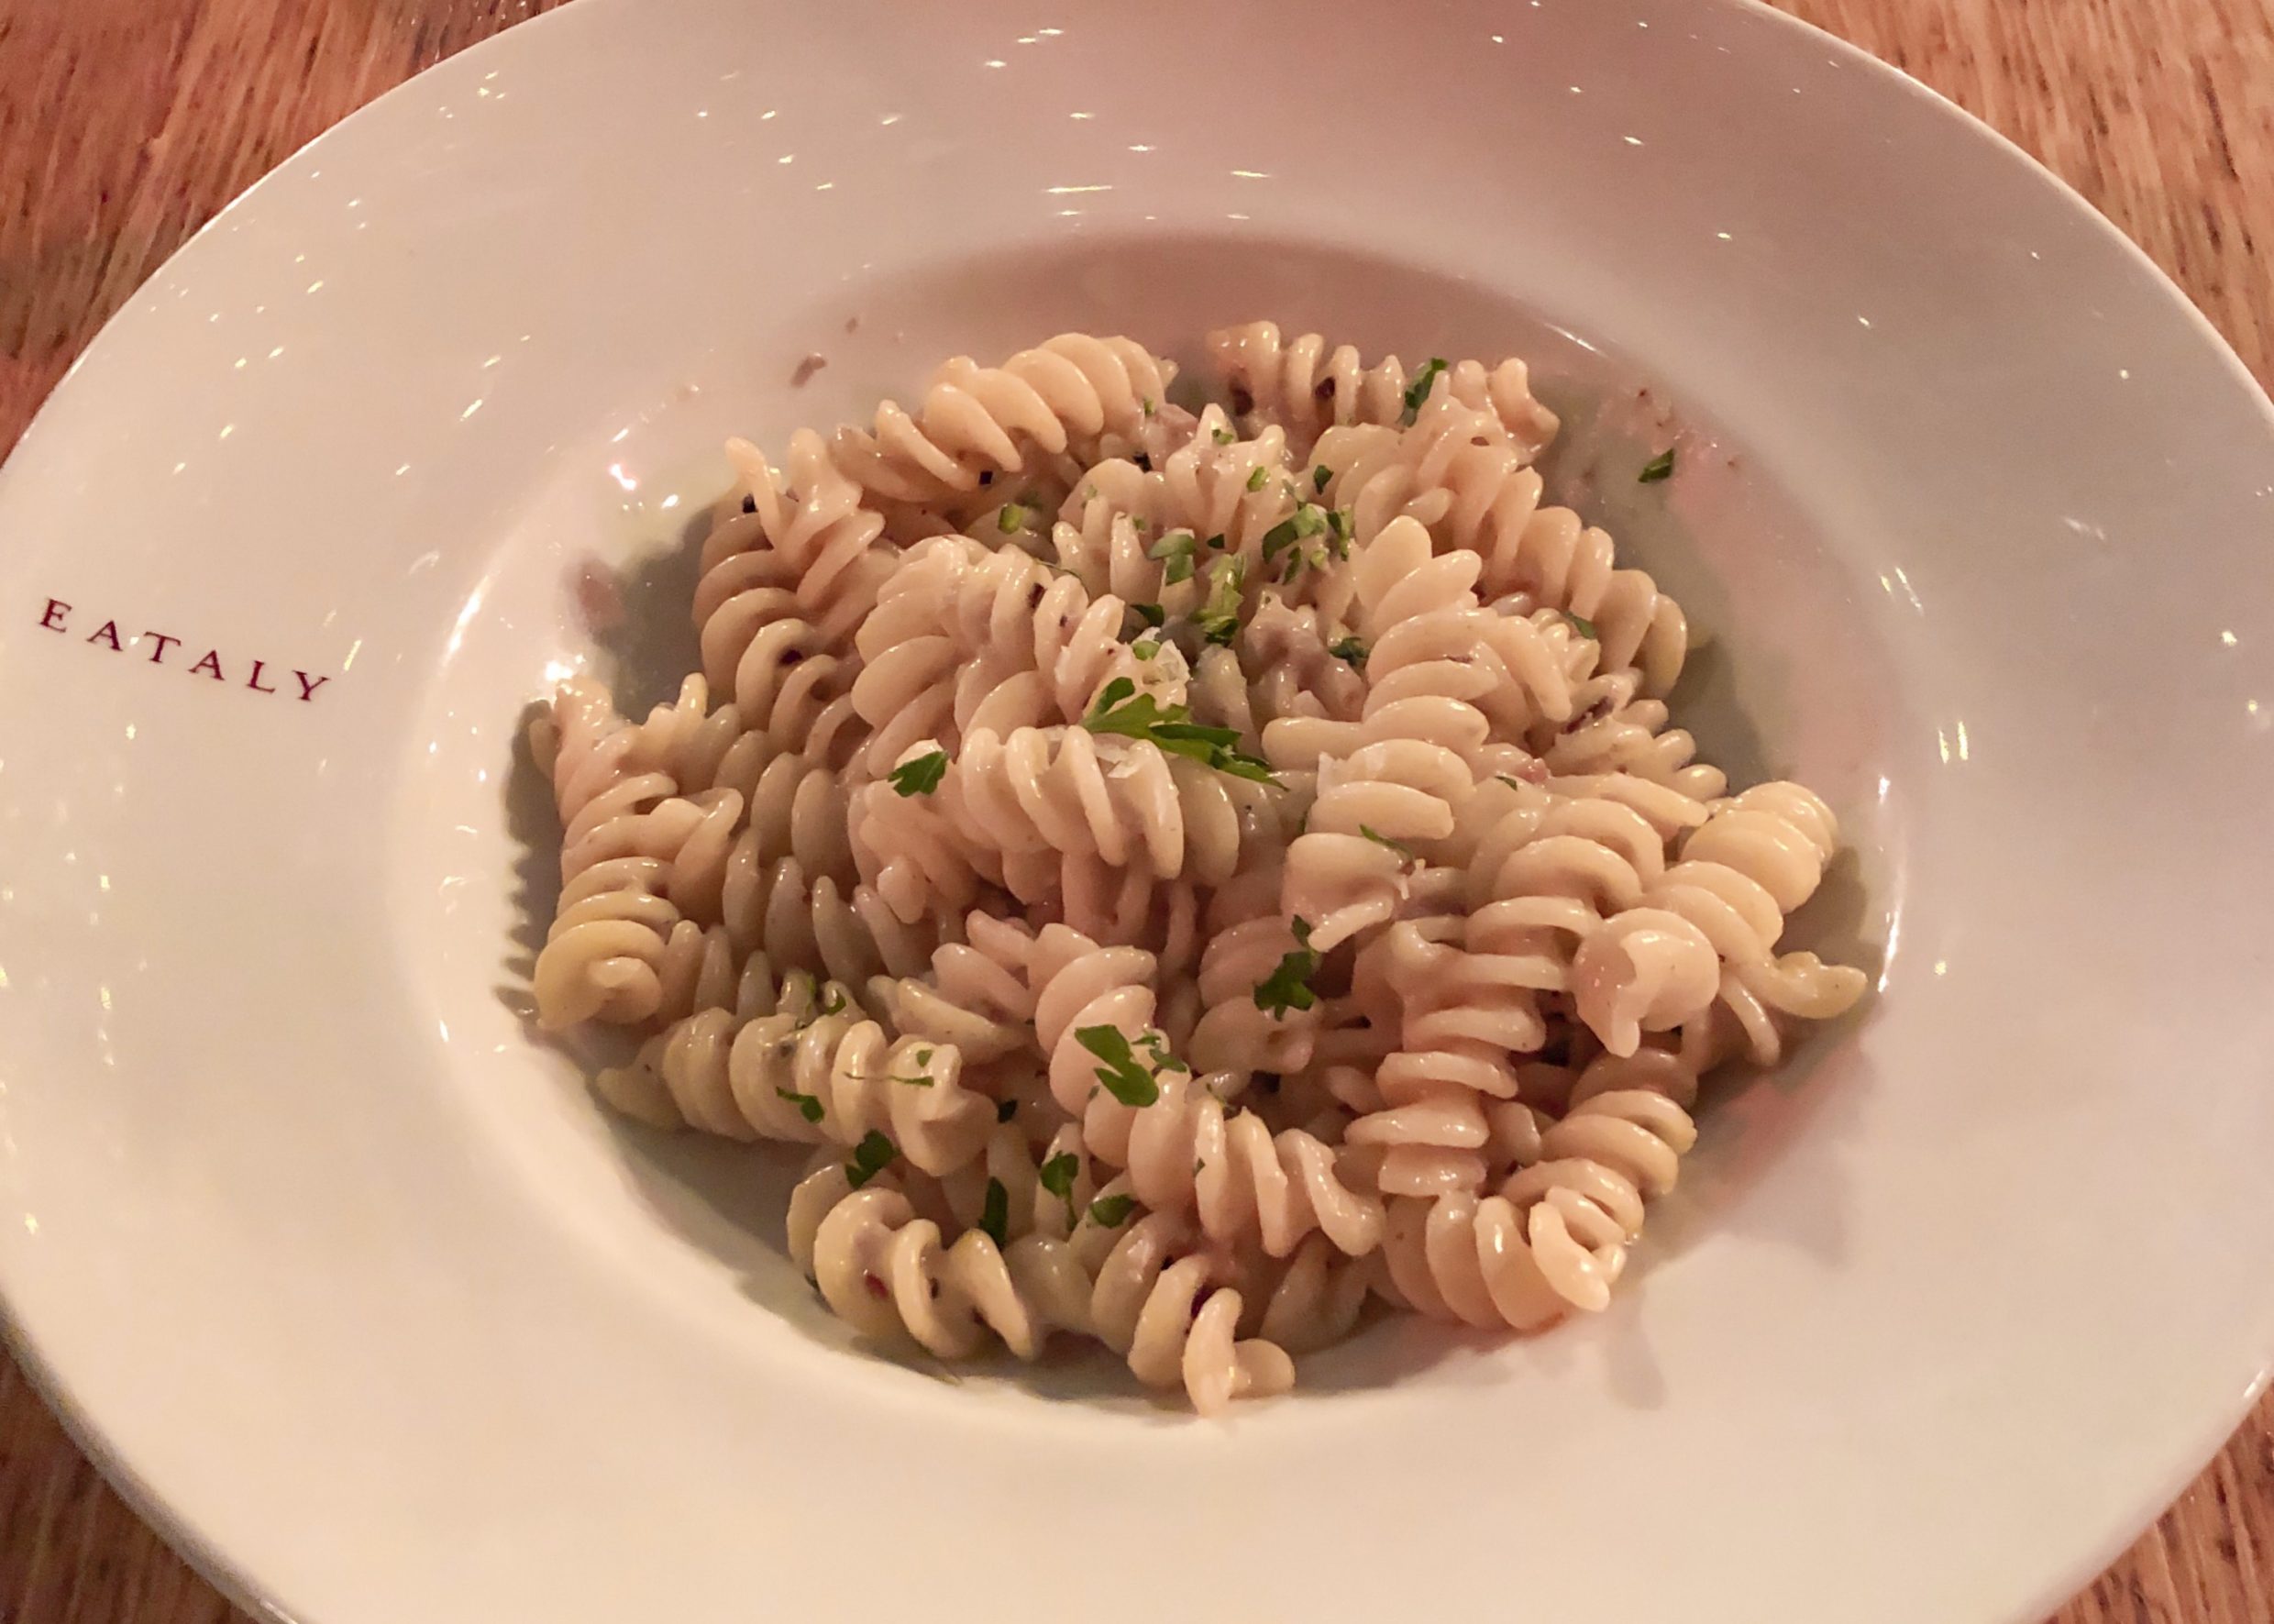 New York City Travel Guide: Truffle pasta at Sierra Alpina at Eataly